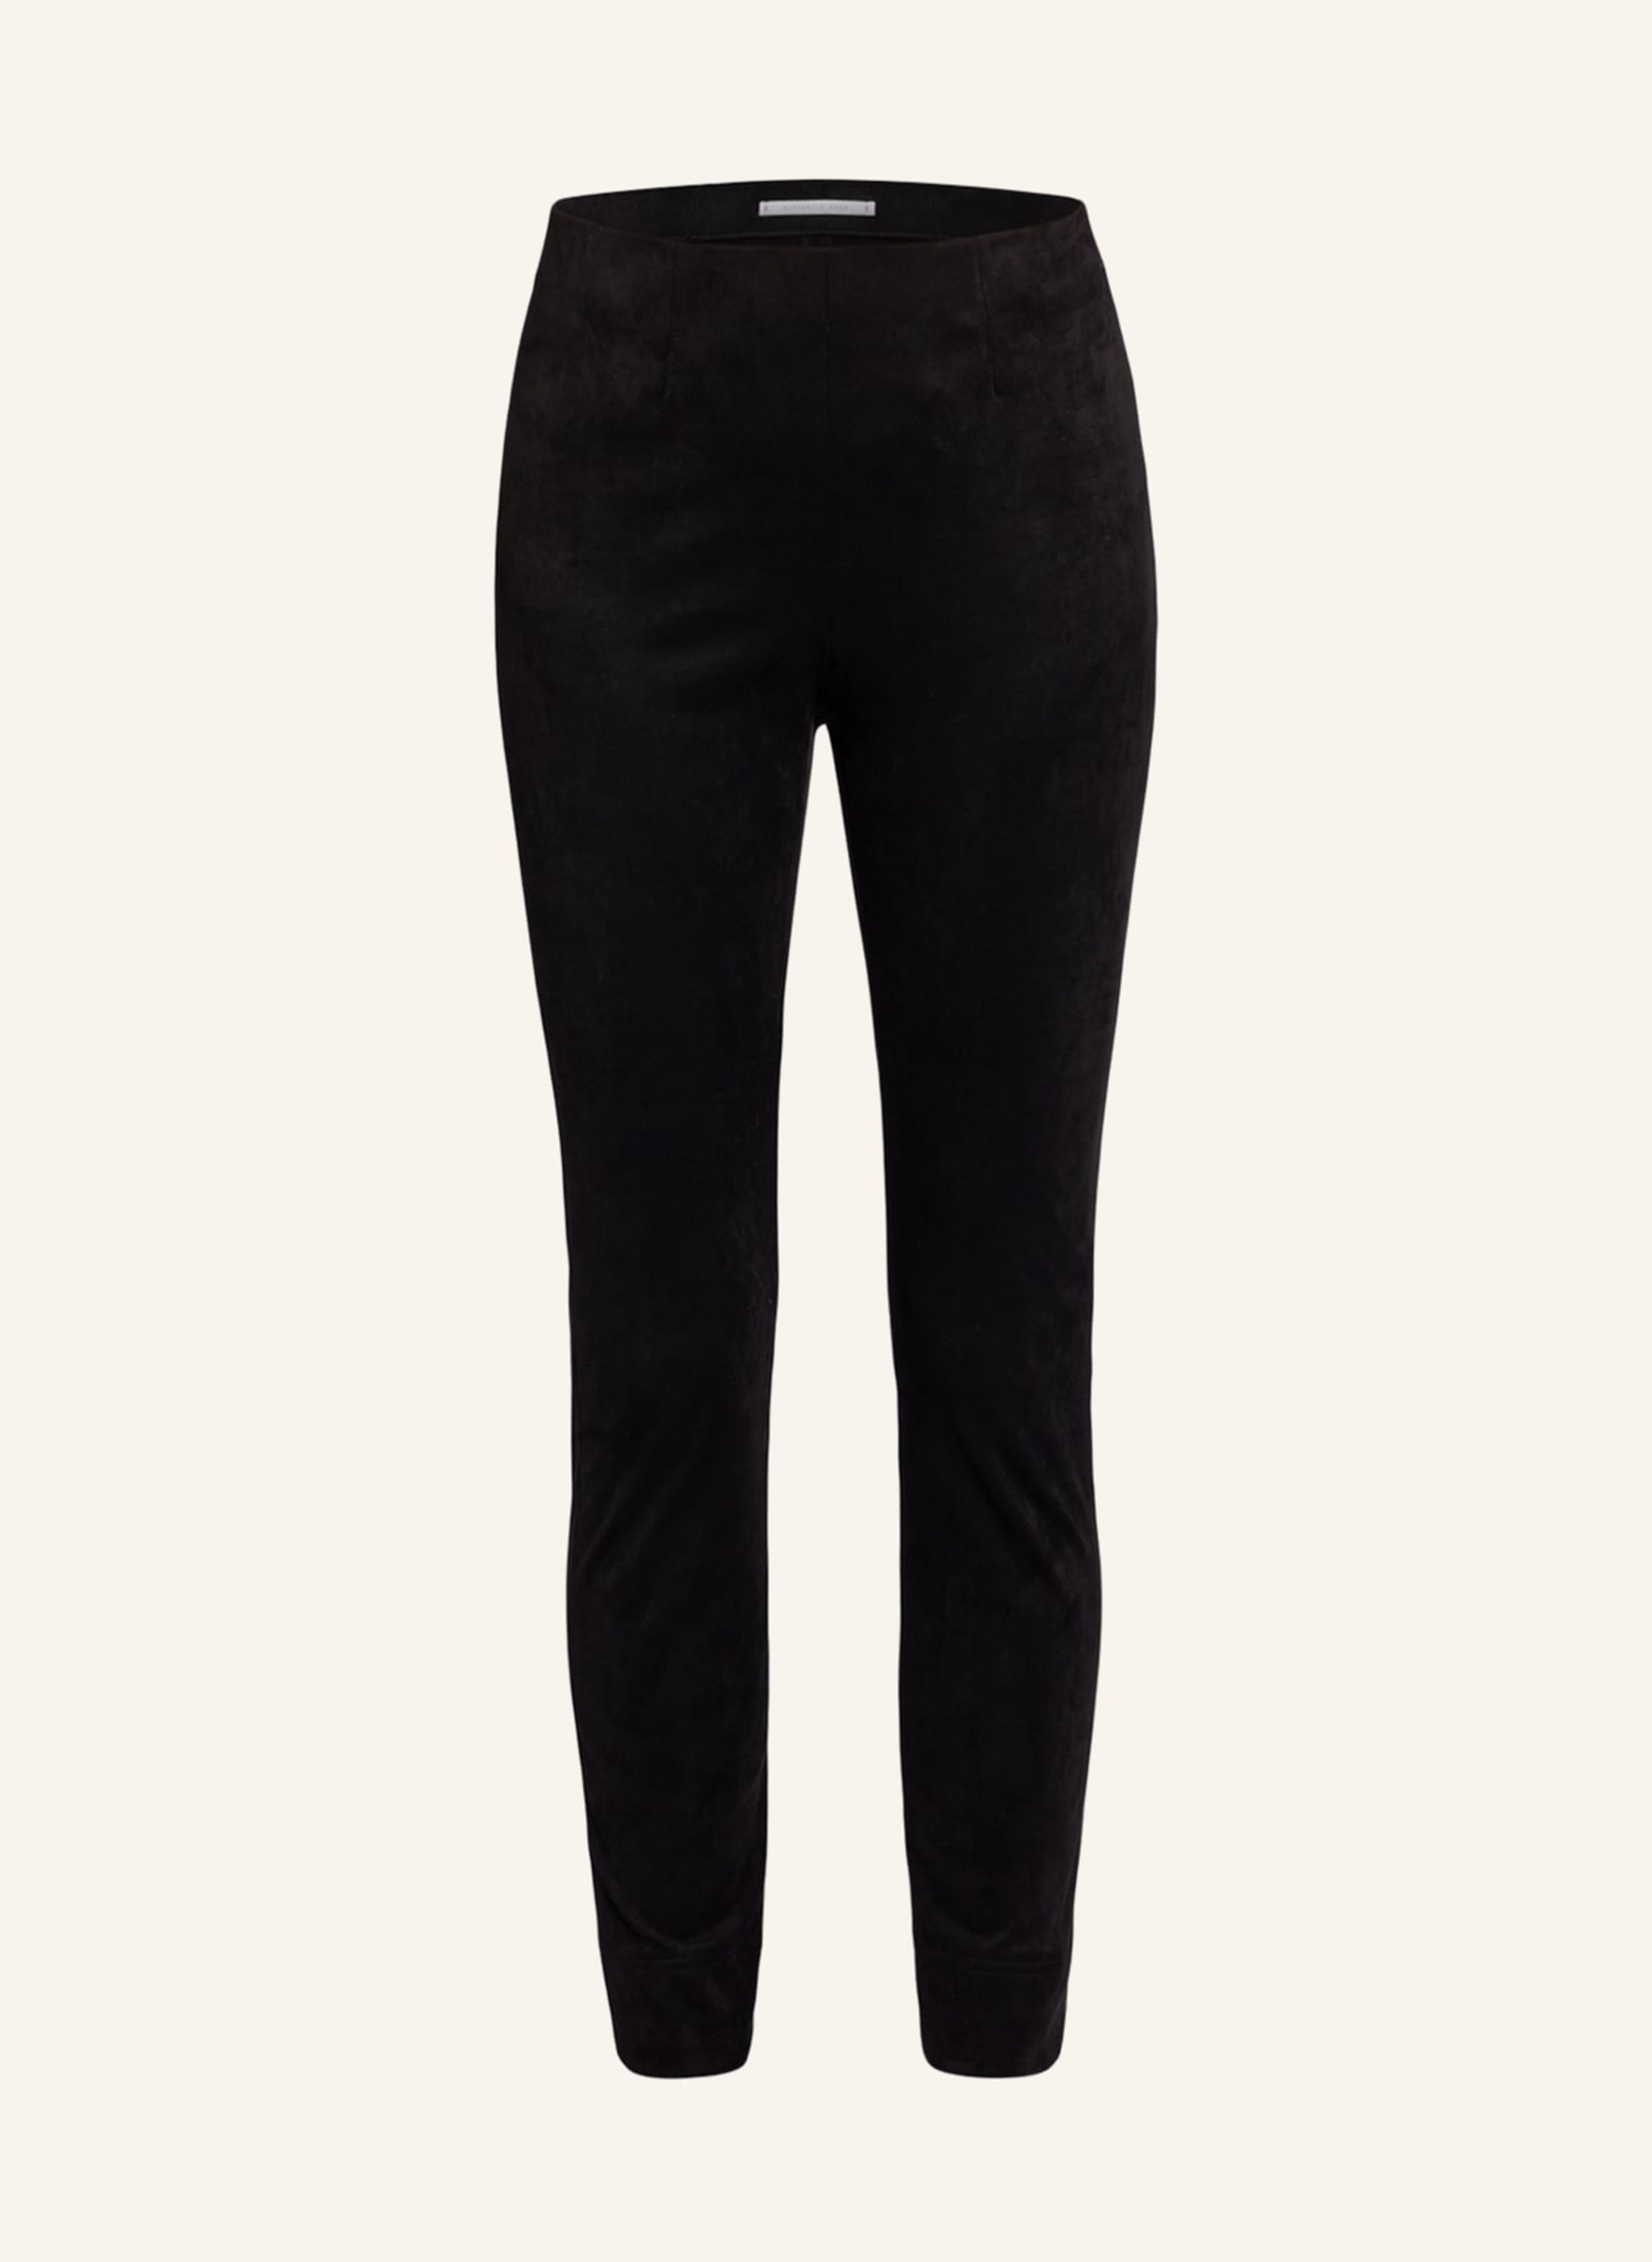 RAFFAELLO ROSSI 7/8 trousers PENNY in leather look in black | Breuninger